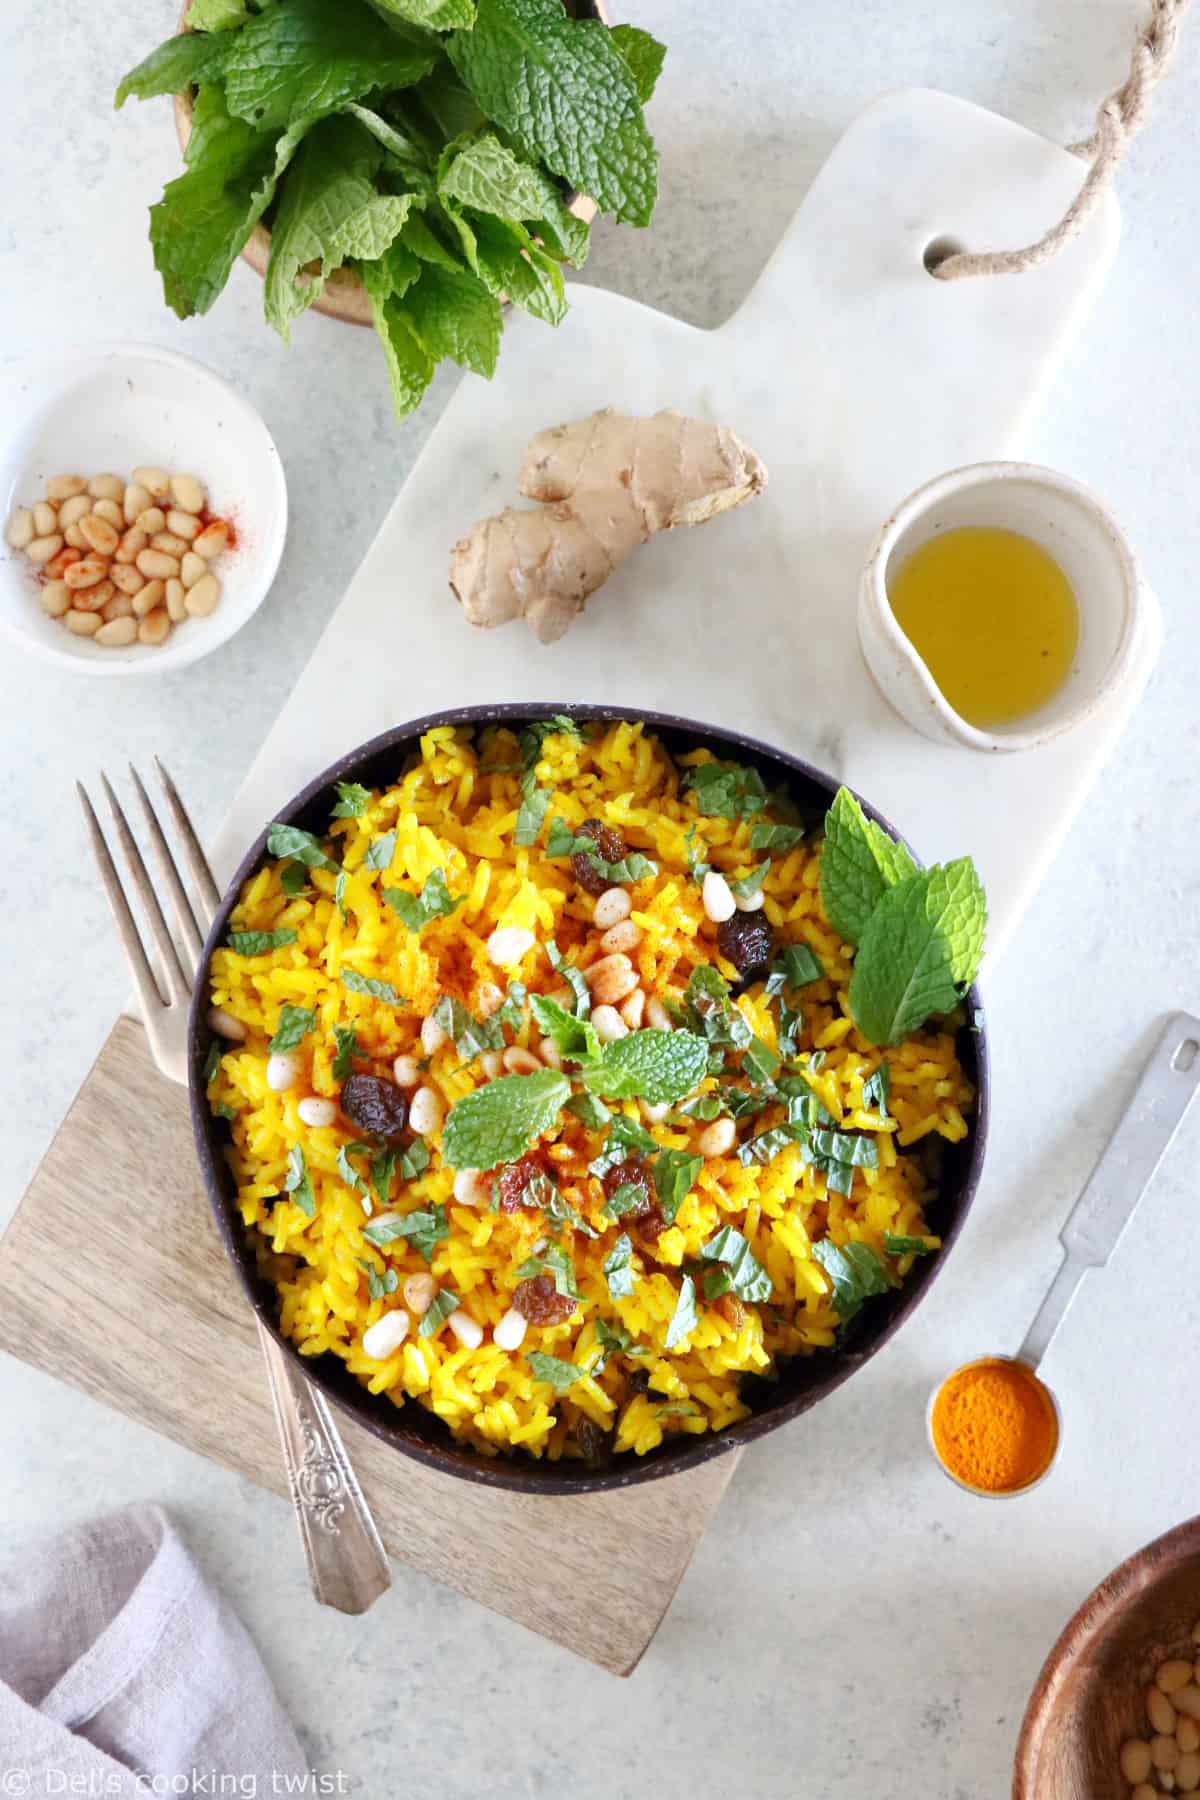 Salade de riz au curry - Recette indienne